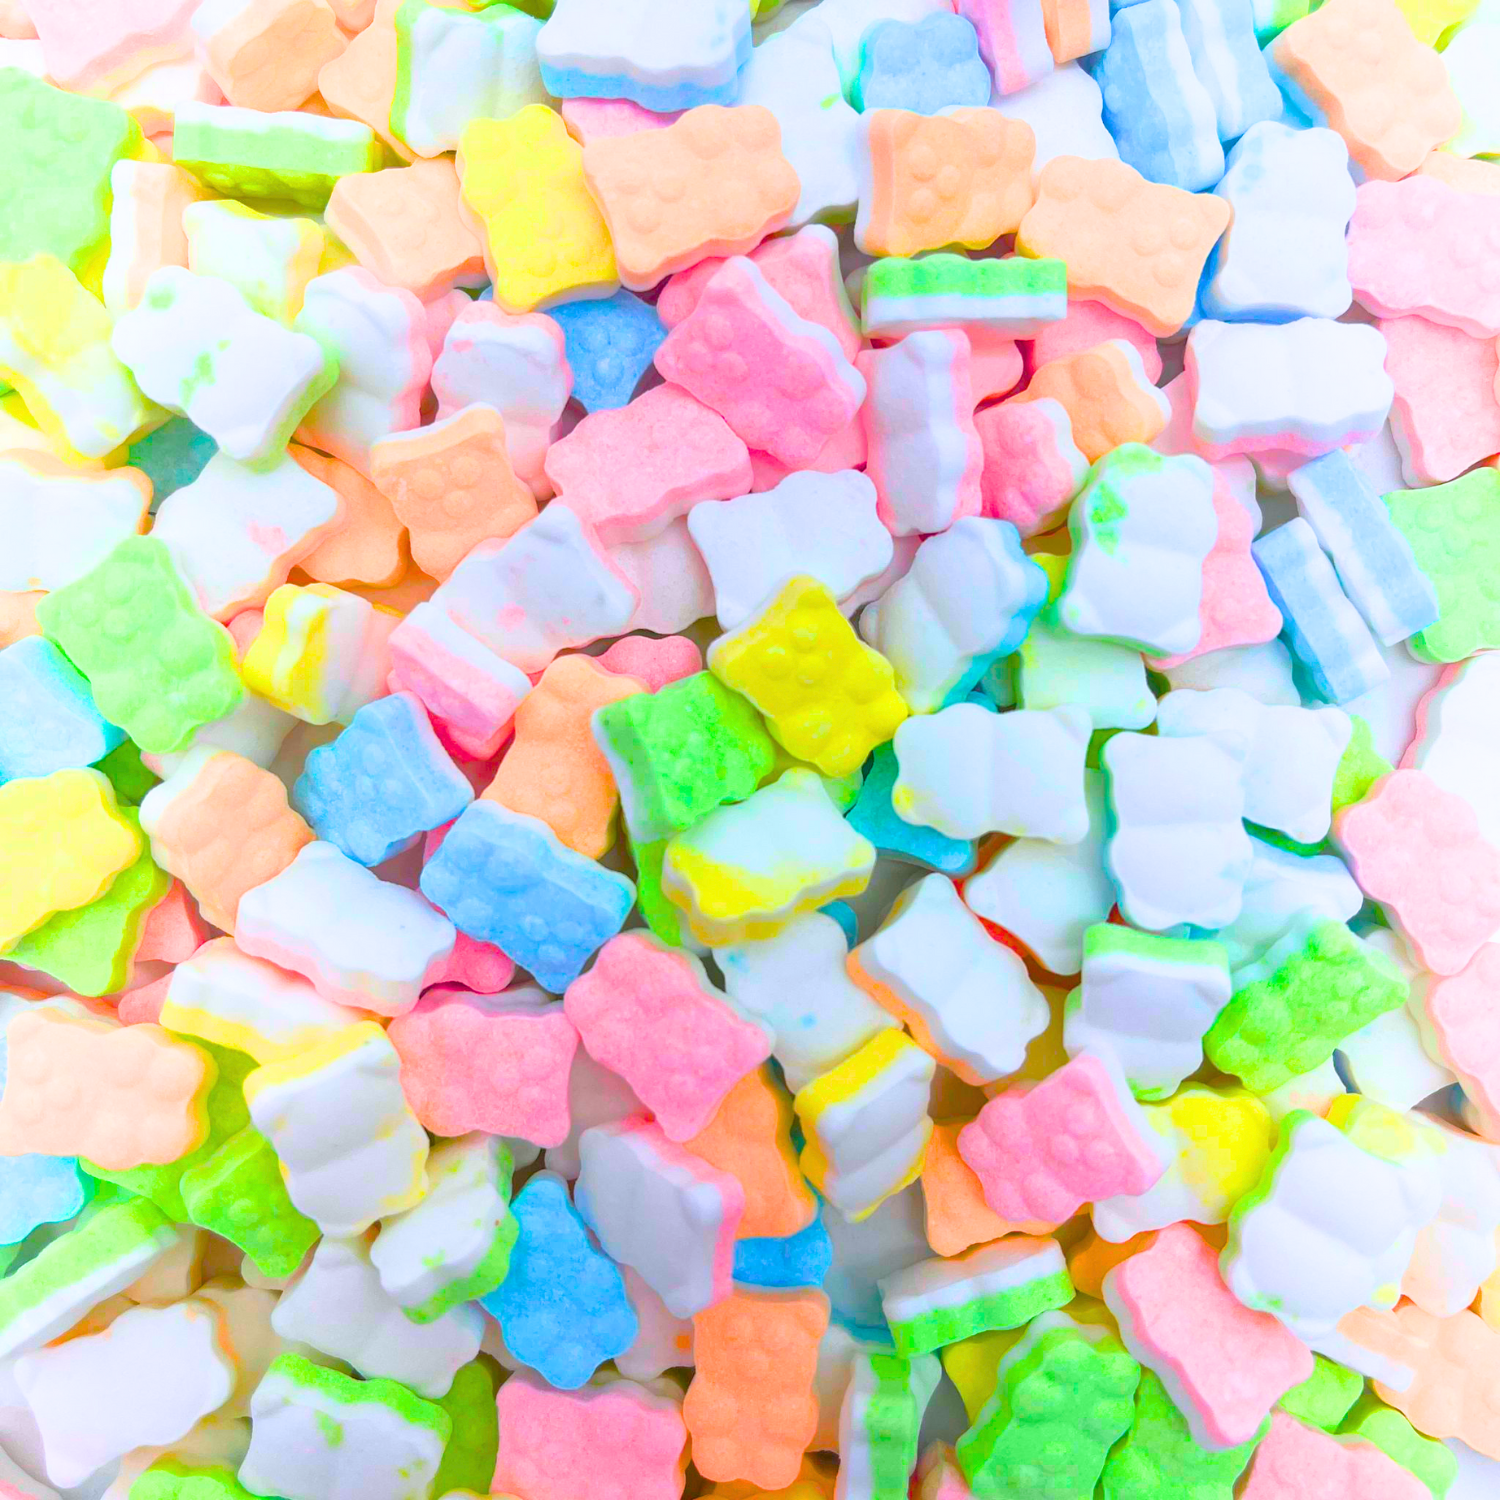 Mini Bears Press Candy